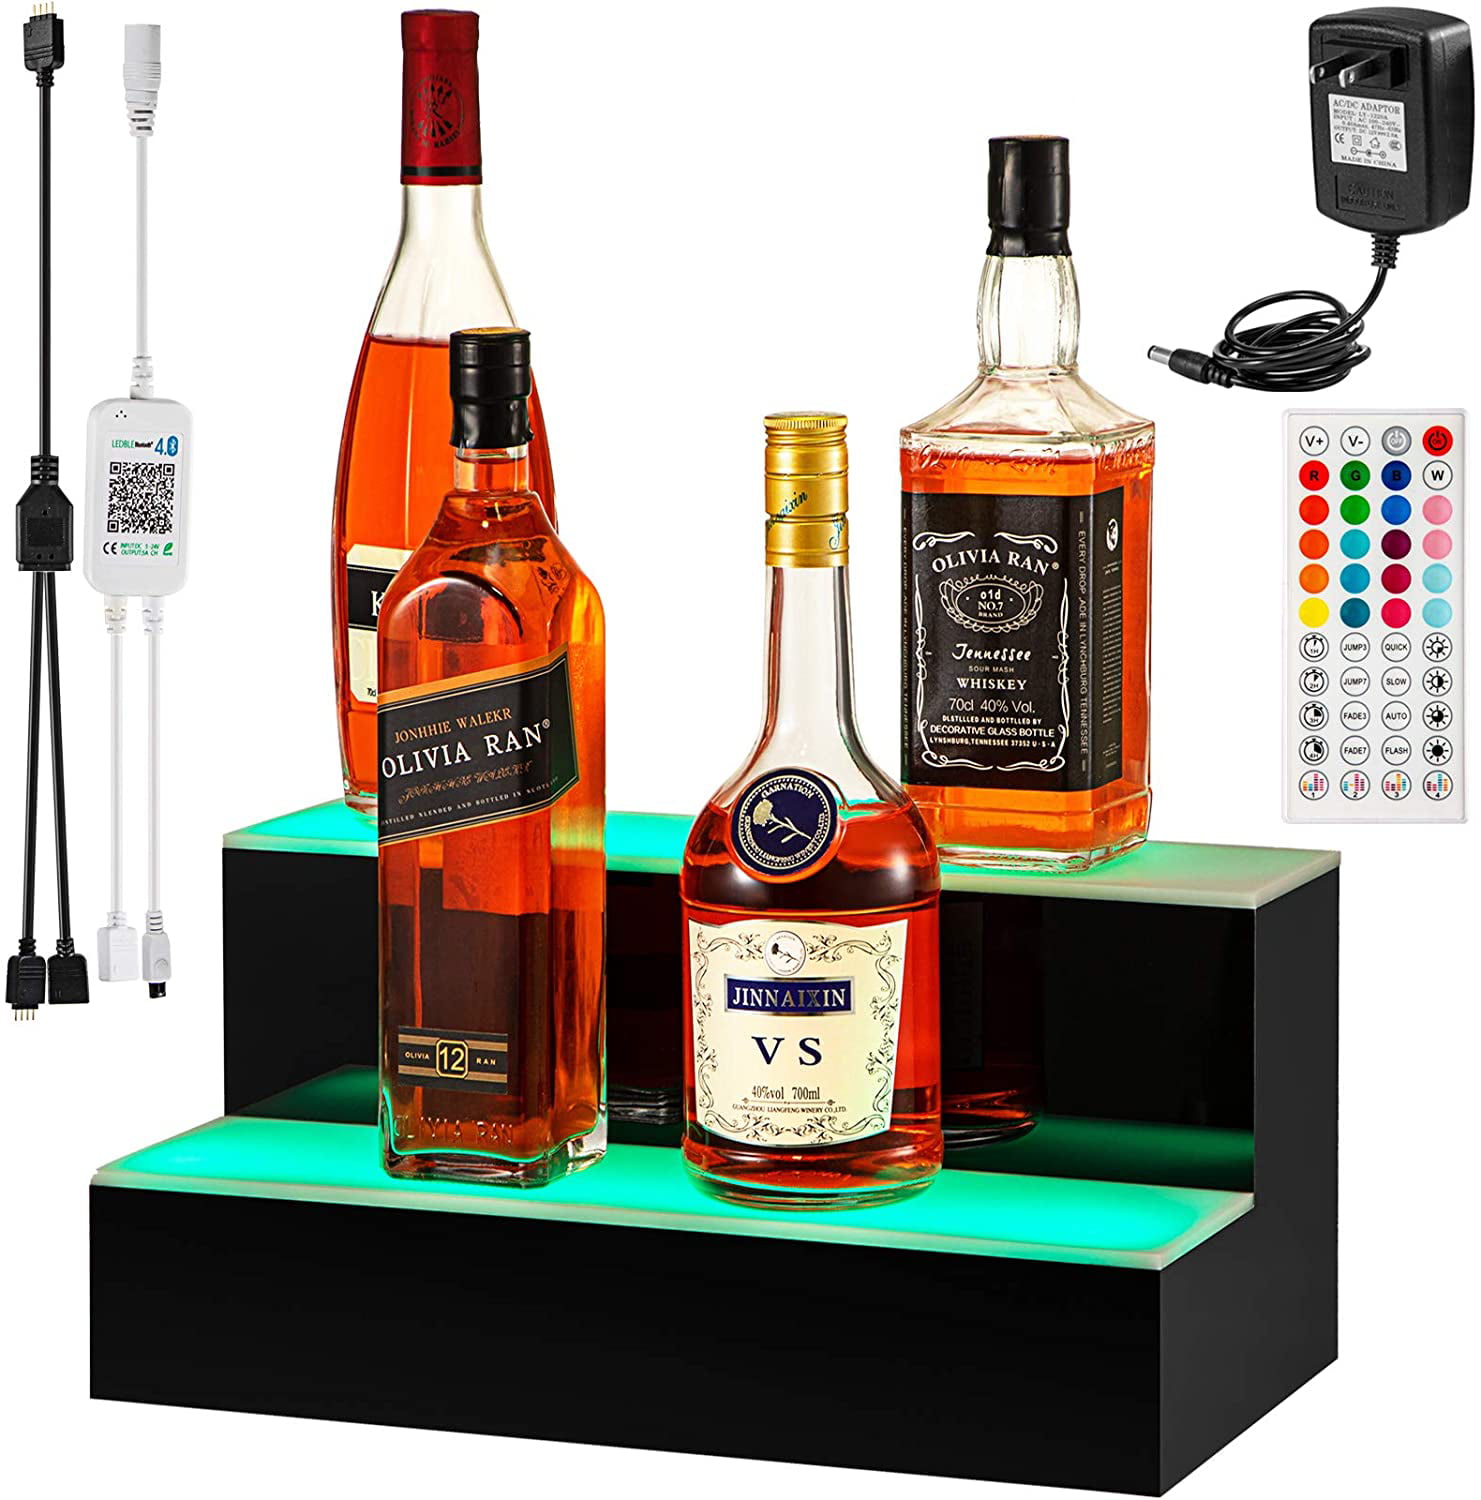 Details about   LED Lighted Liquor Bottle Display Illuminated Bottle Shelf 3 Step Home Bar Bott 